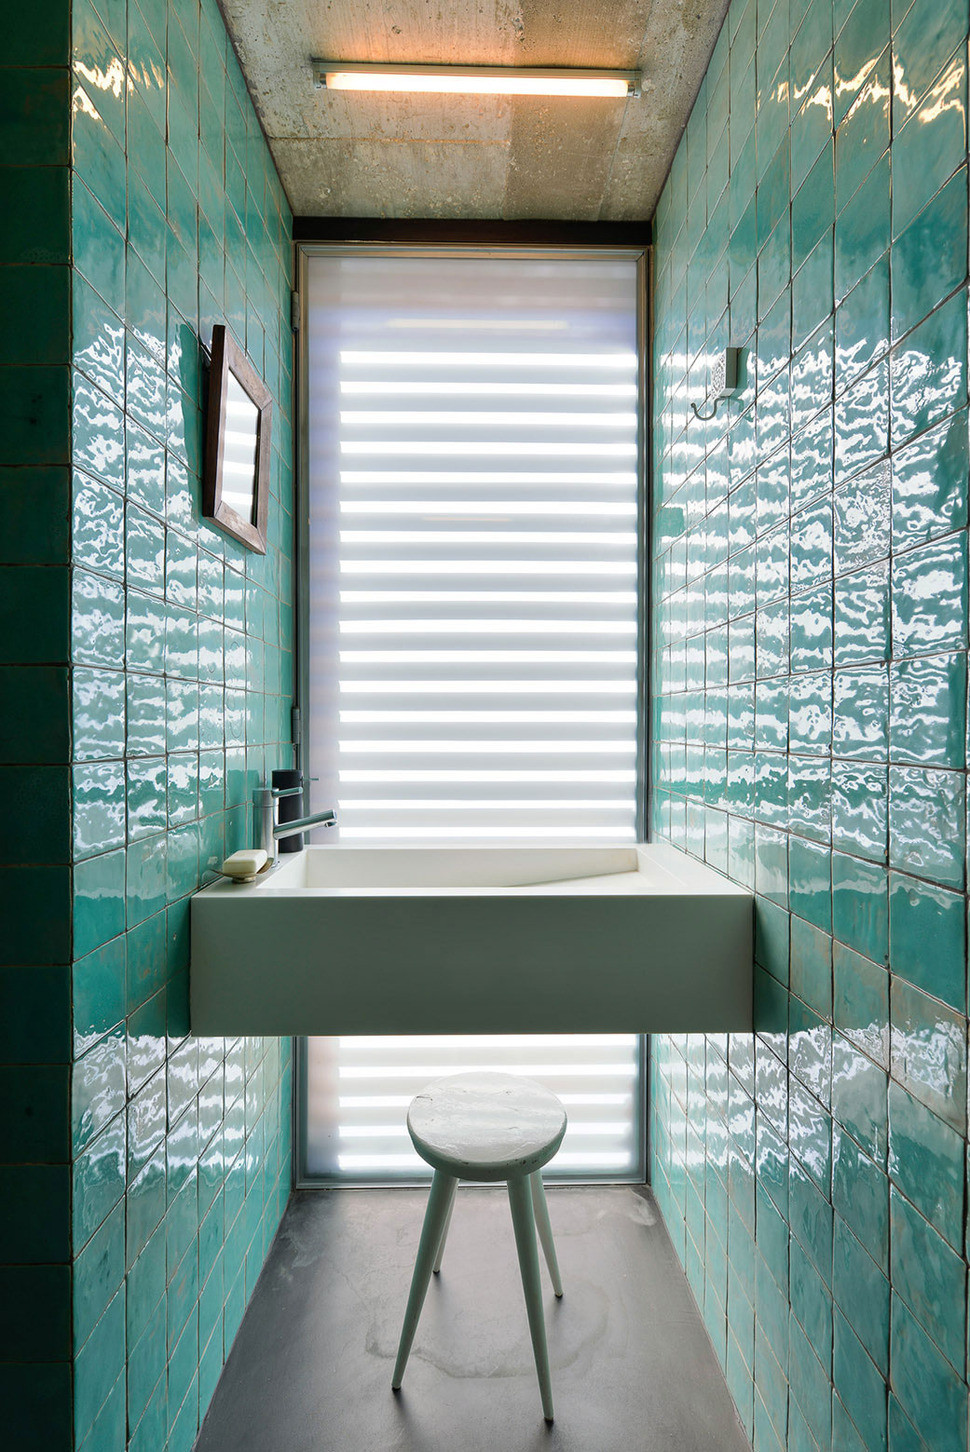 Bathroom Tiles Designs
 Top 10 Tile Design Ideas for a Modern Bathroom for 2015